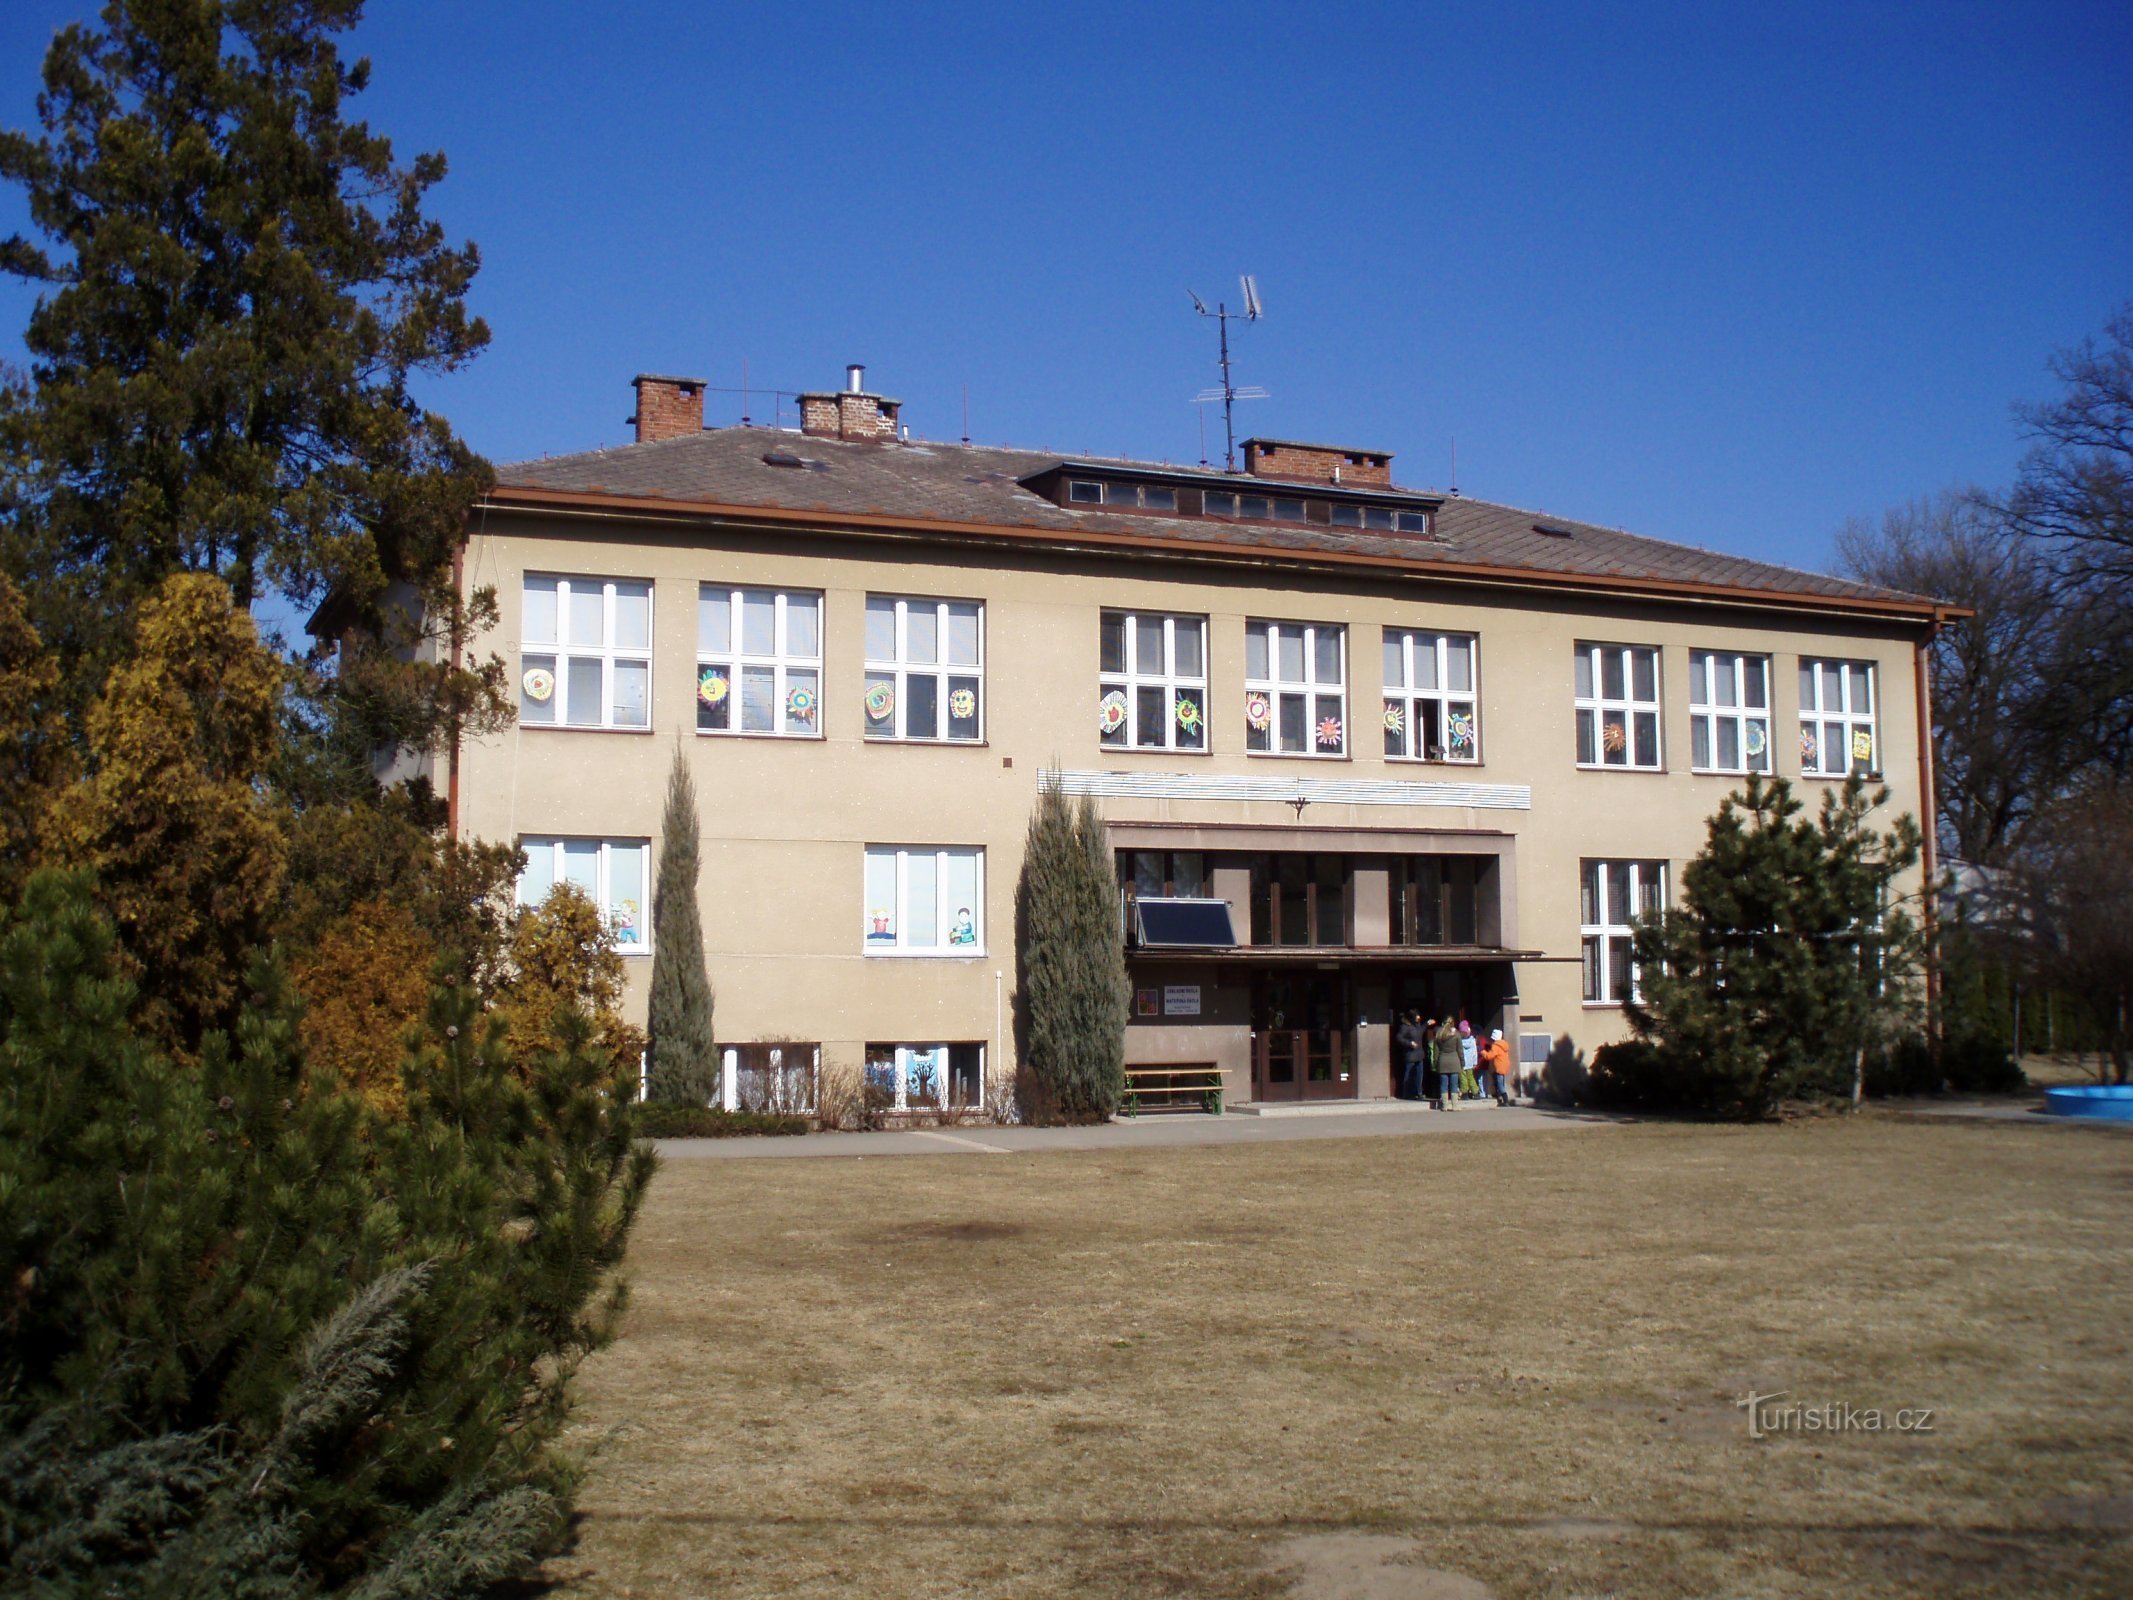 Școală din Malšov Lhota (8.3.2011 martie XNUMX)